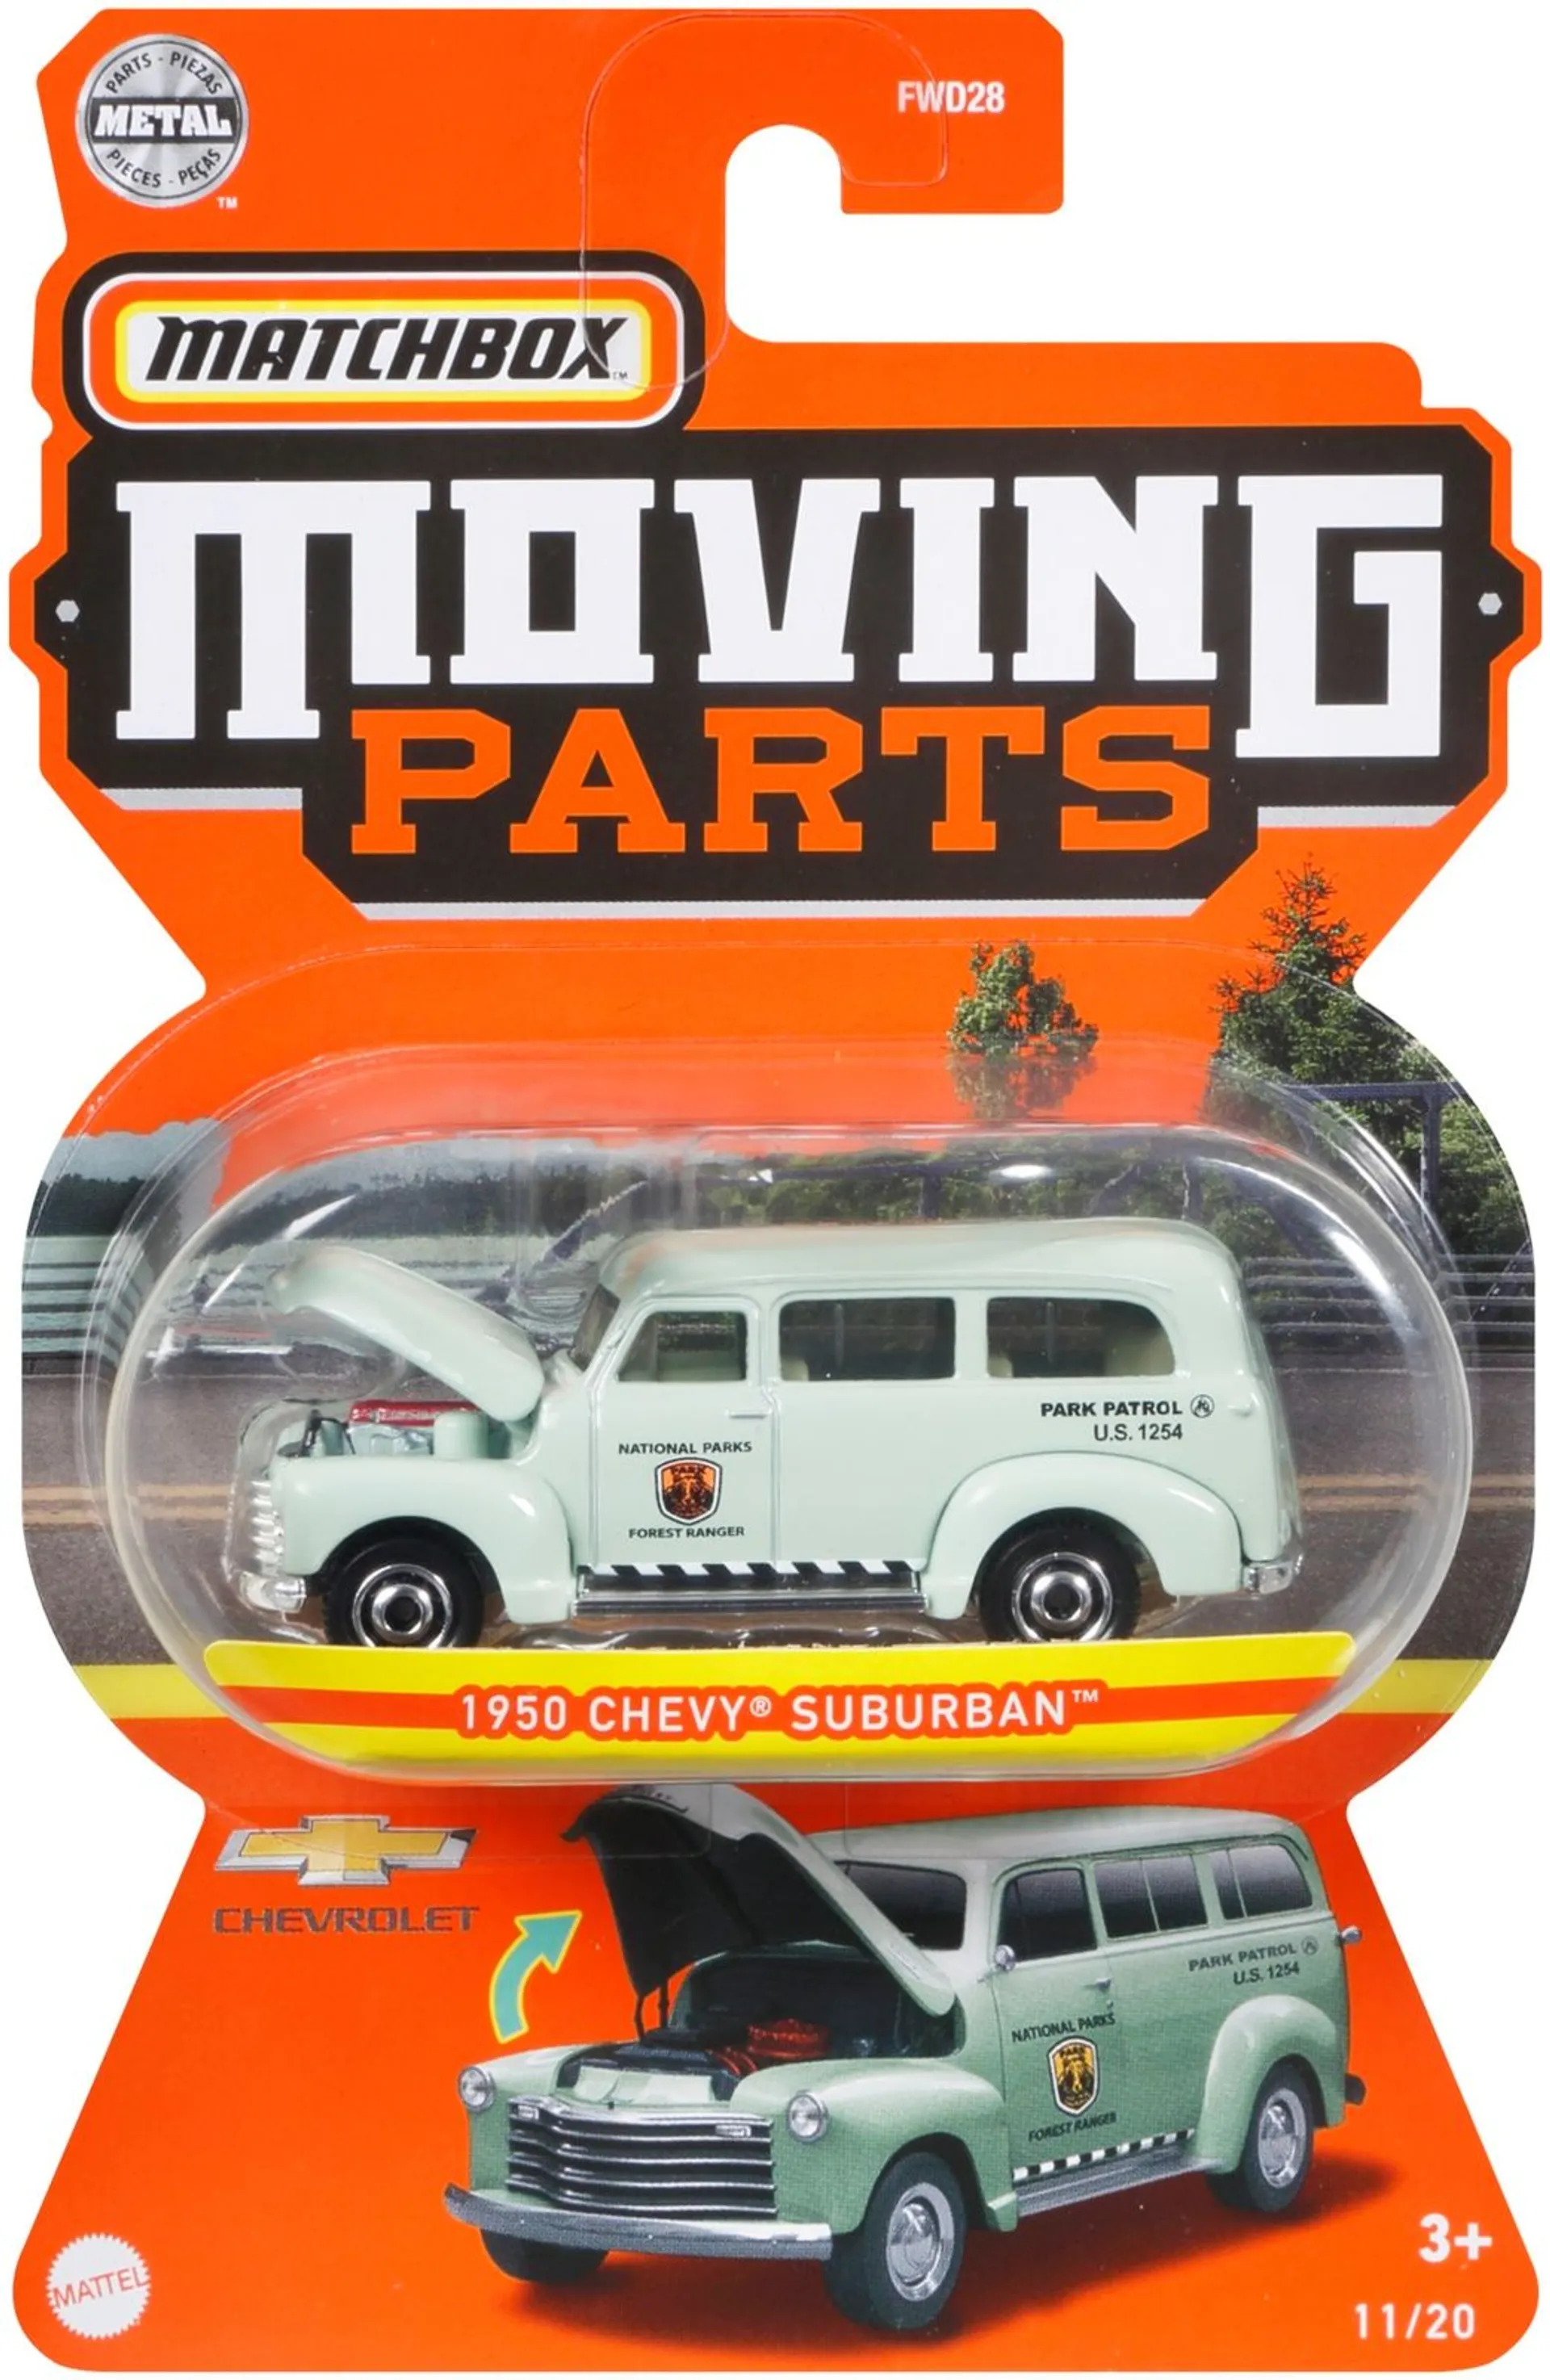 Matchbox moving parts vehicles fwd28 - 1